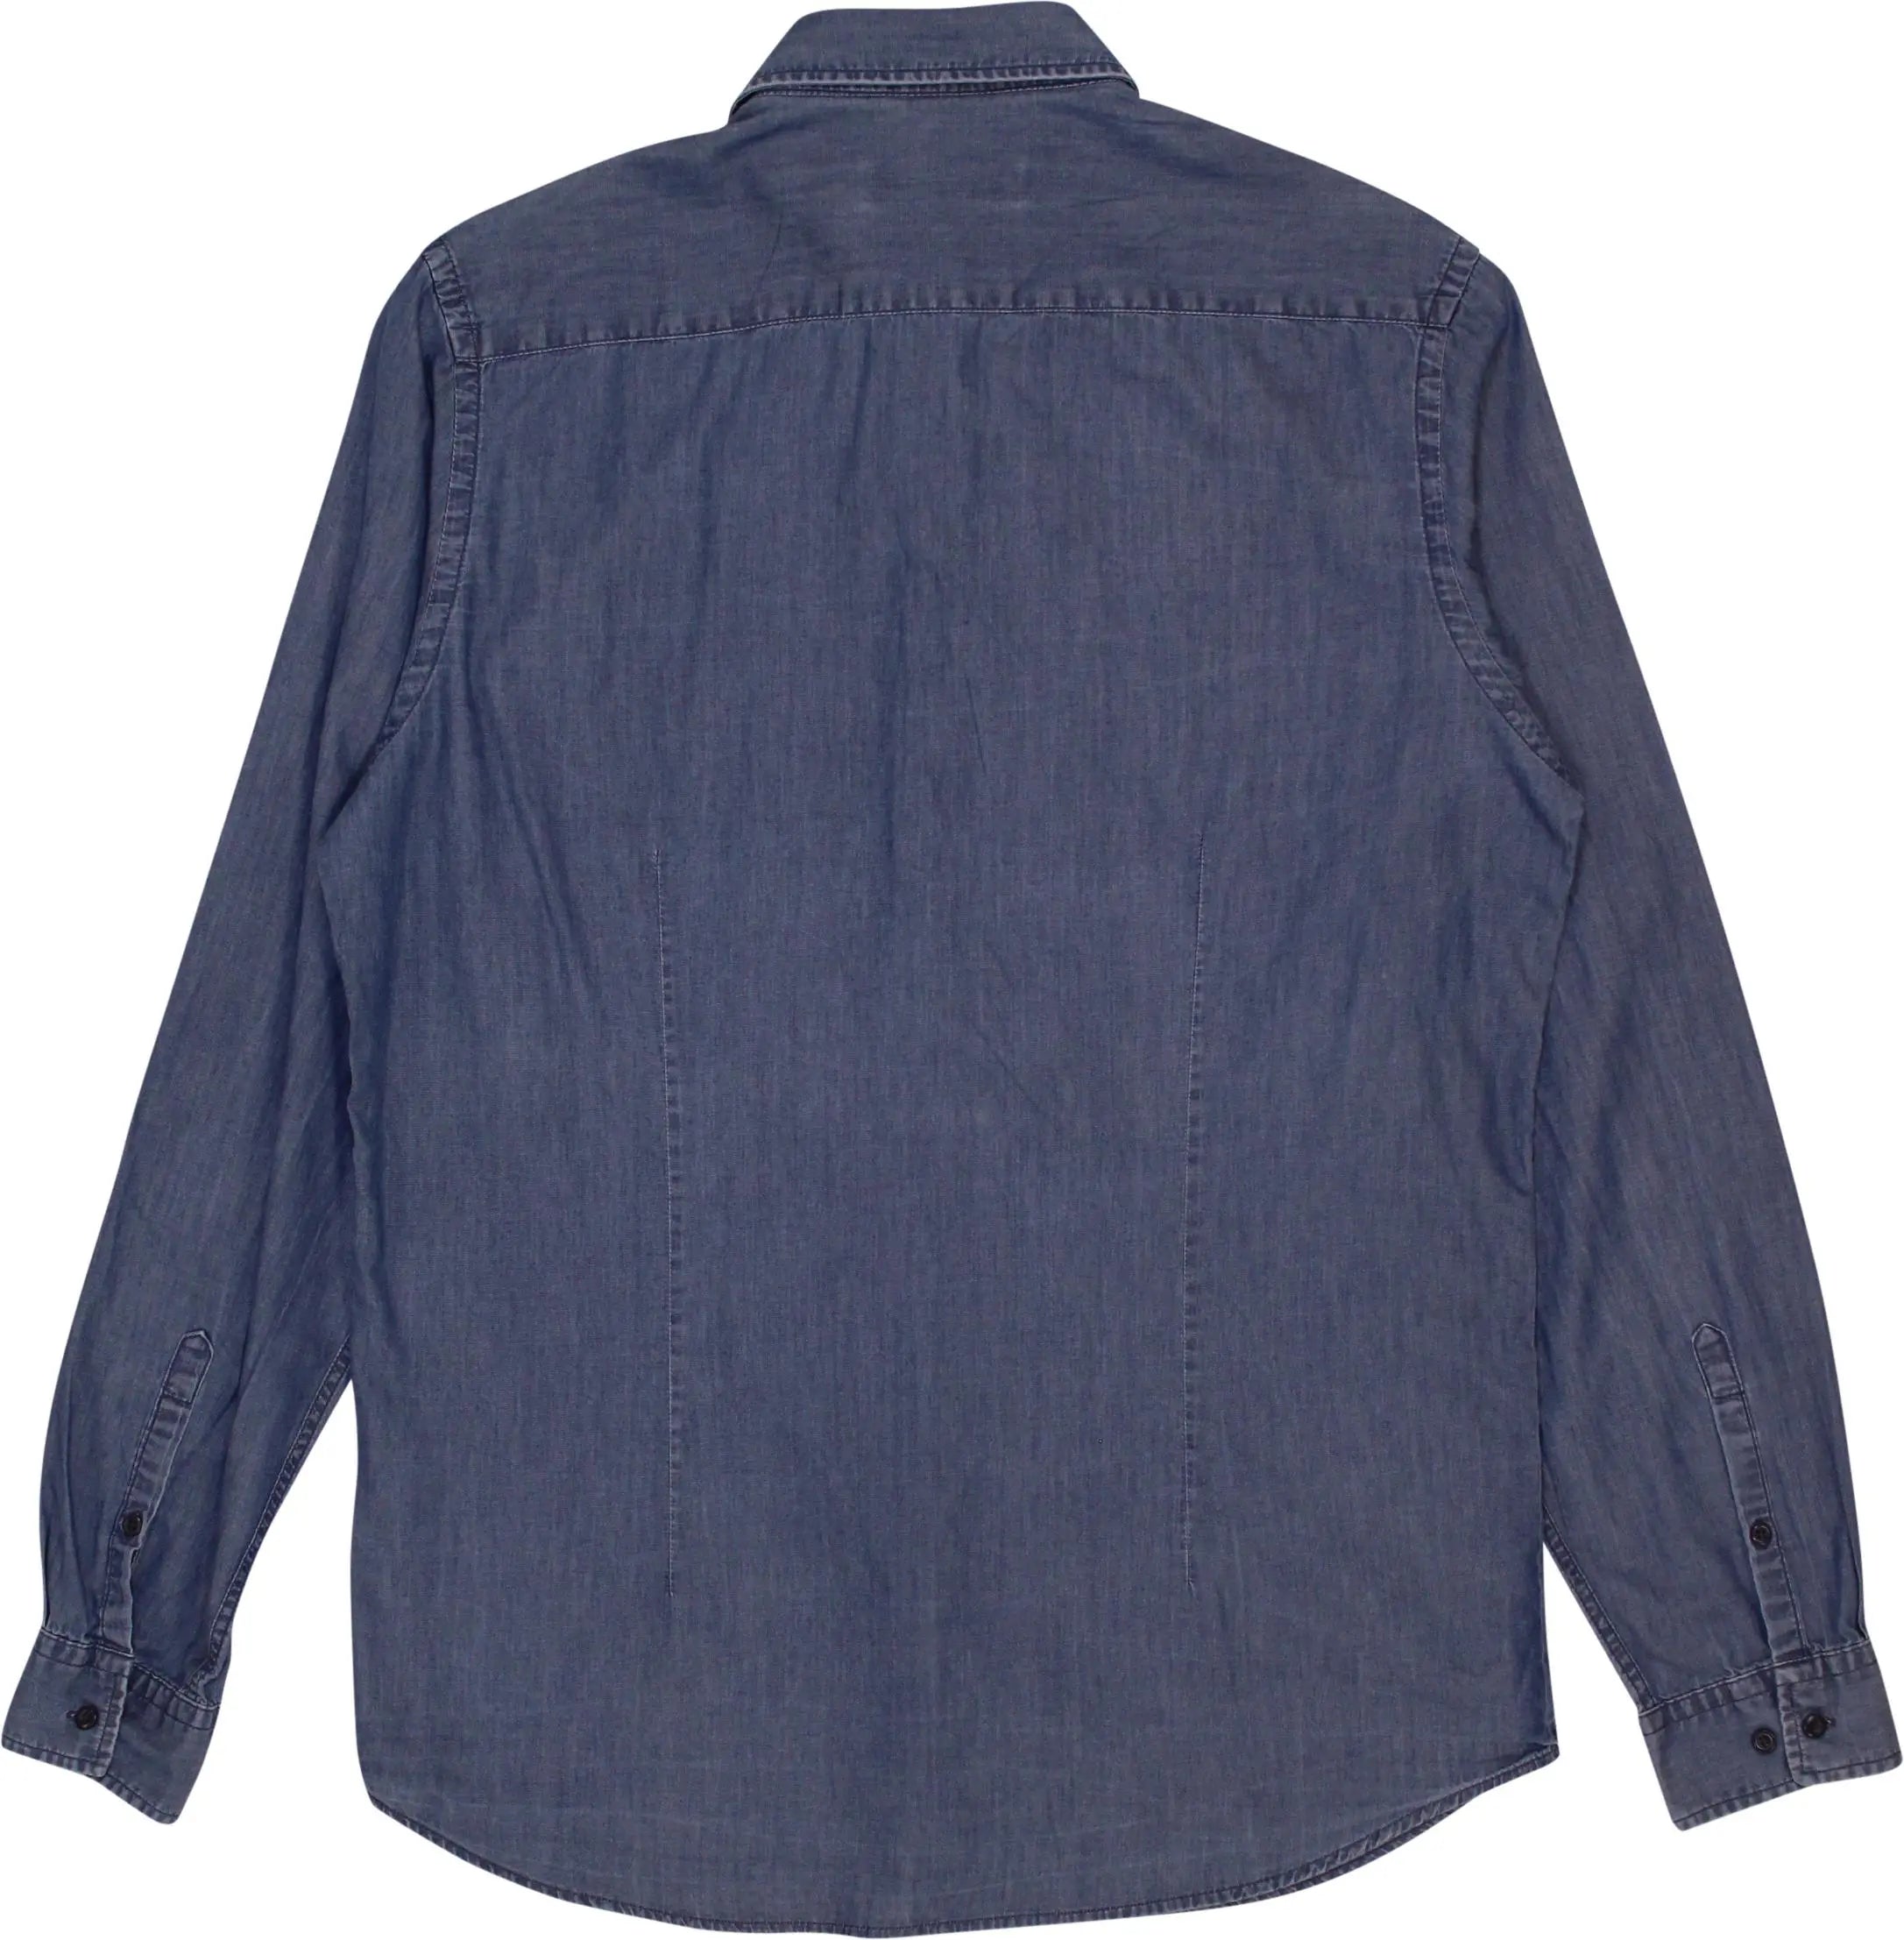 C&A - Slim Fit Denim Shirt- ThriftTale.com - Vintage and second handclothing